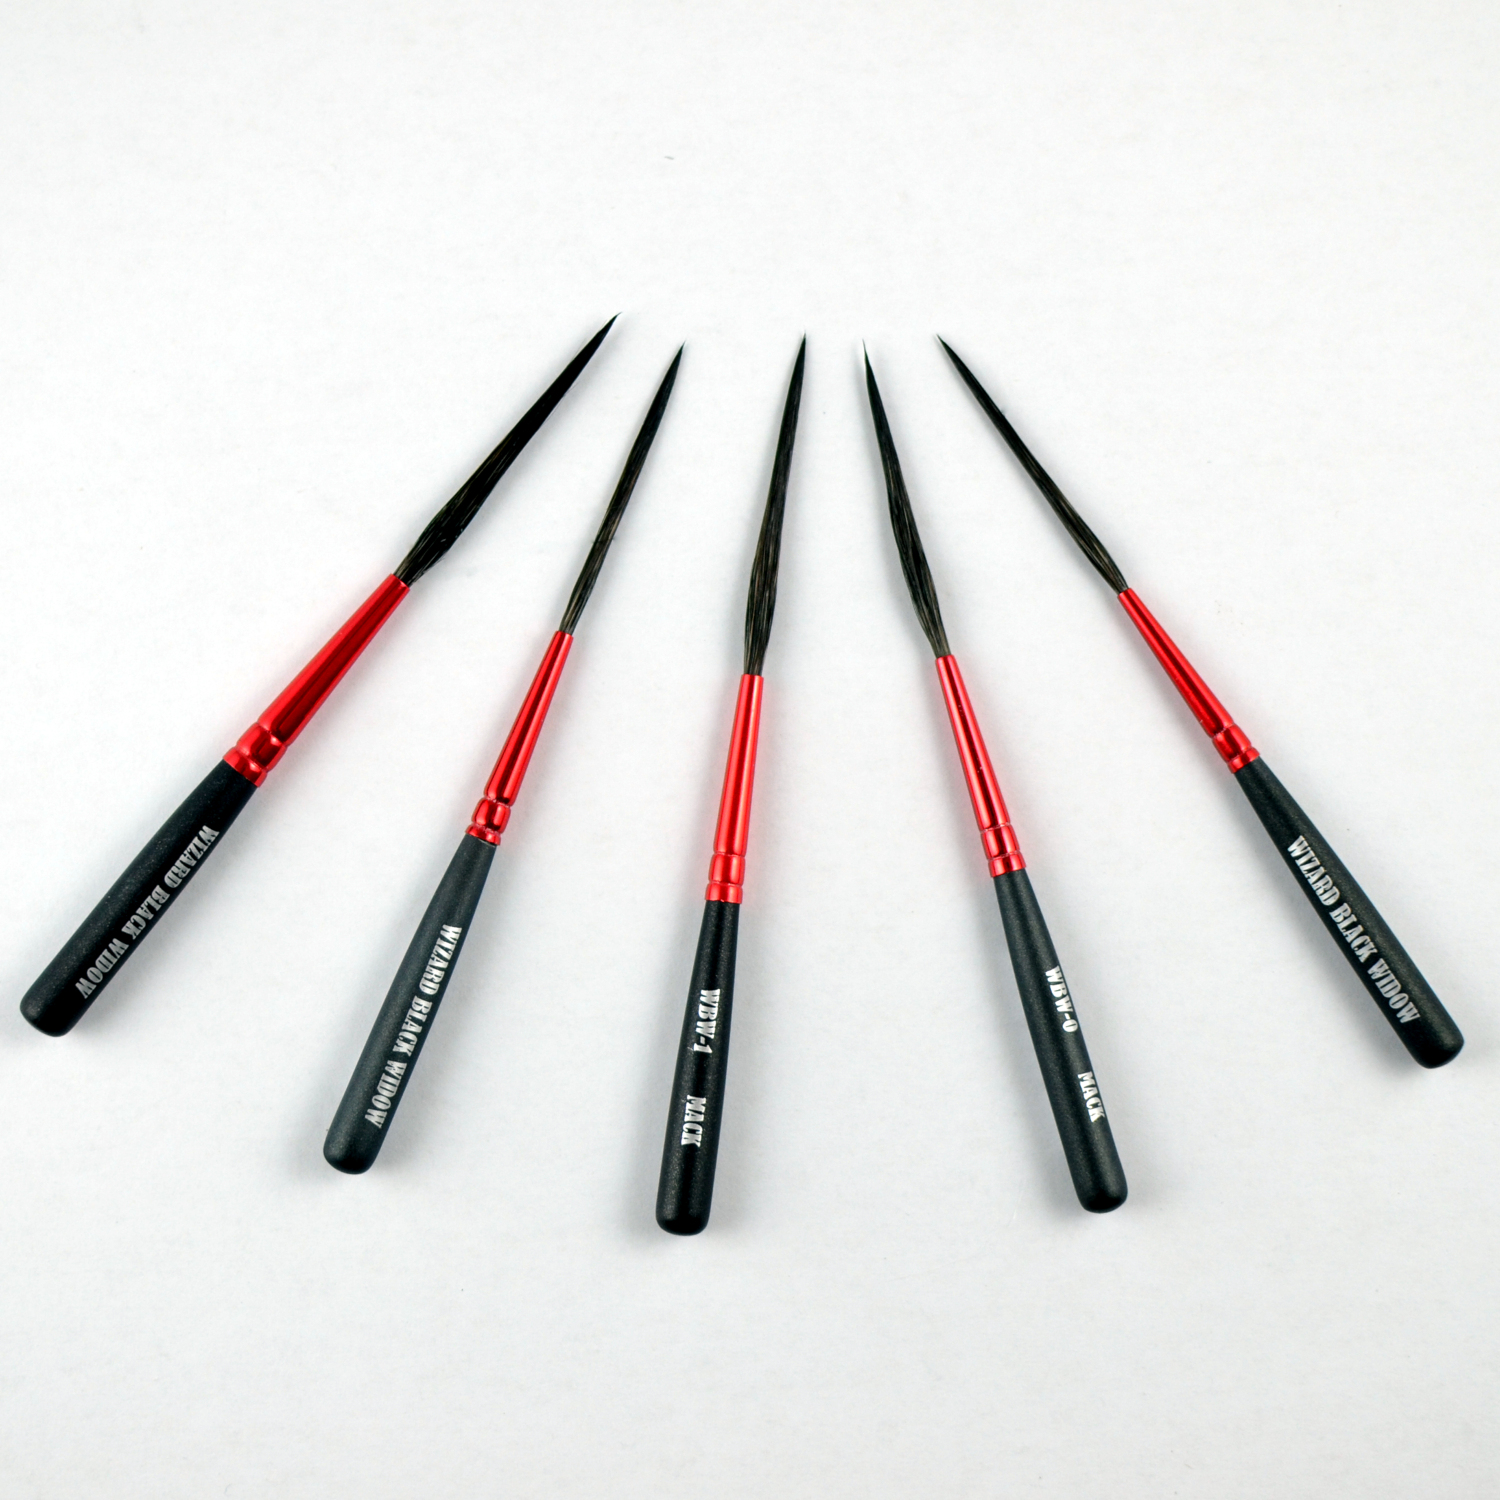 Andrew Mack Wizard Black Widow Scroll Striper Brush Series Wbw Size 000